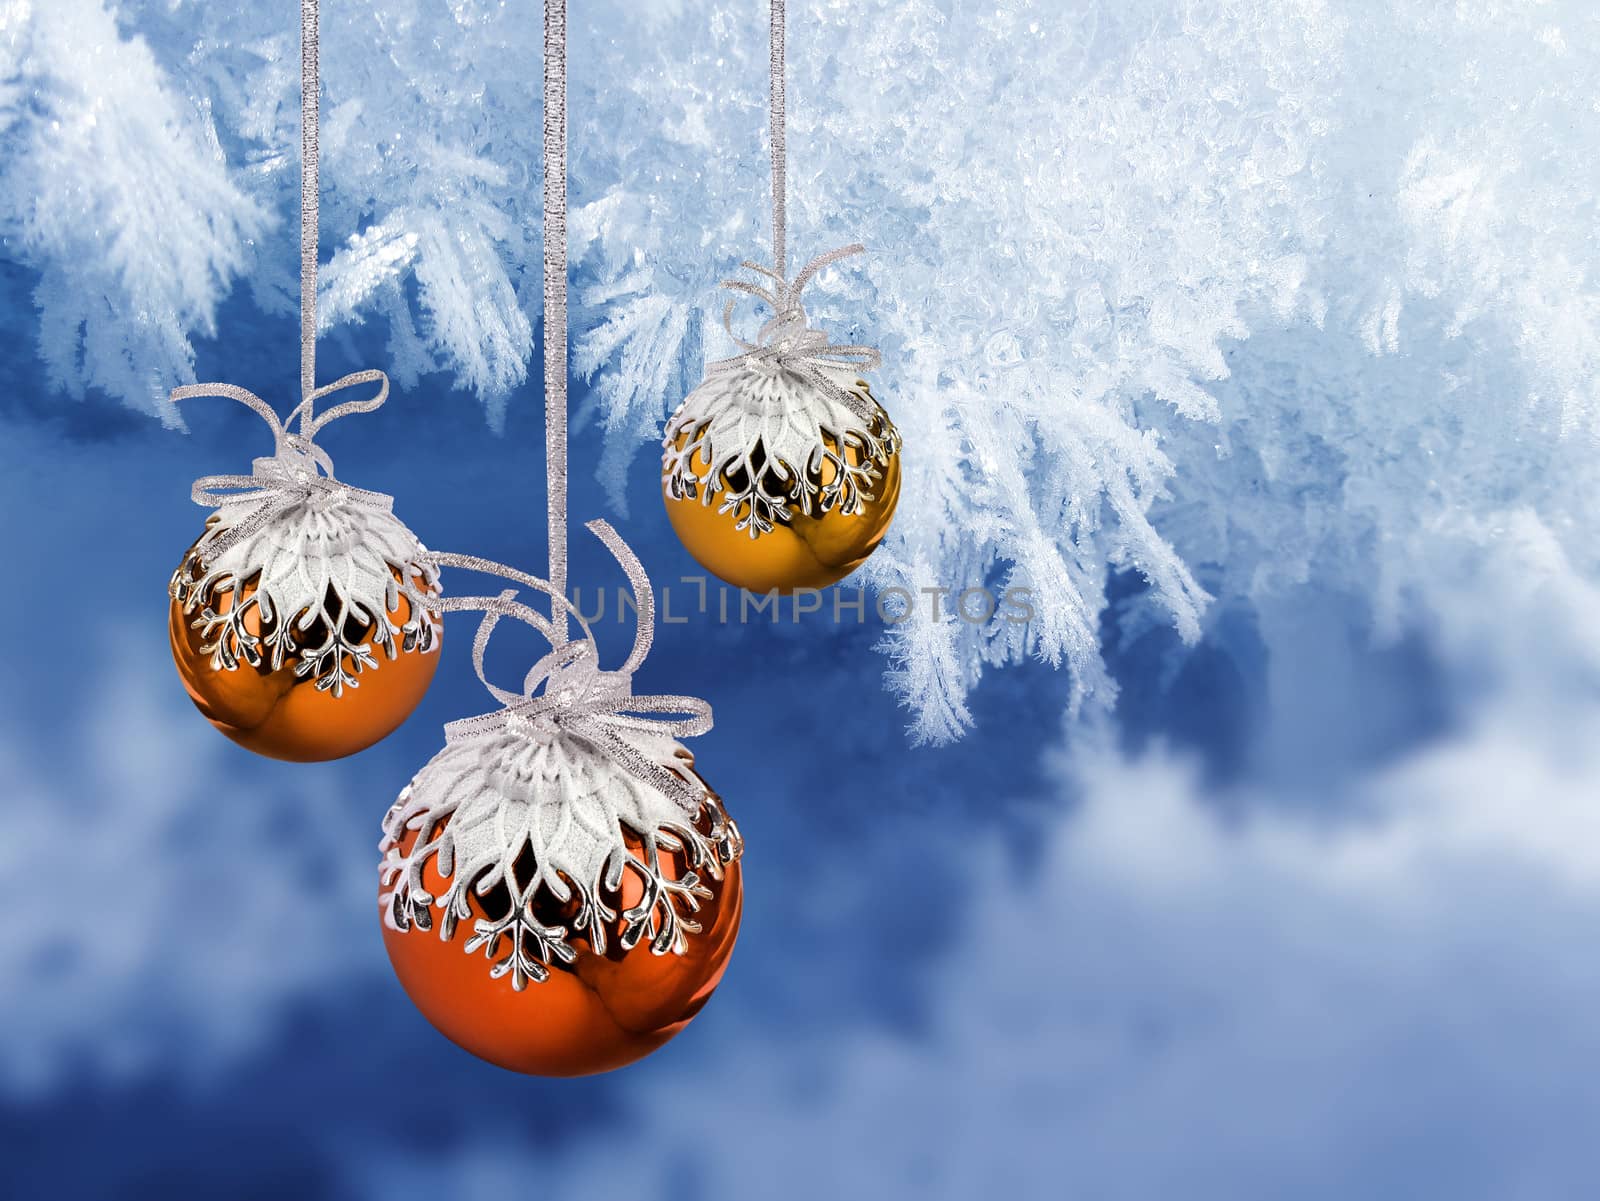 Christmas balls frosty background by anterovium